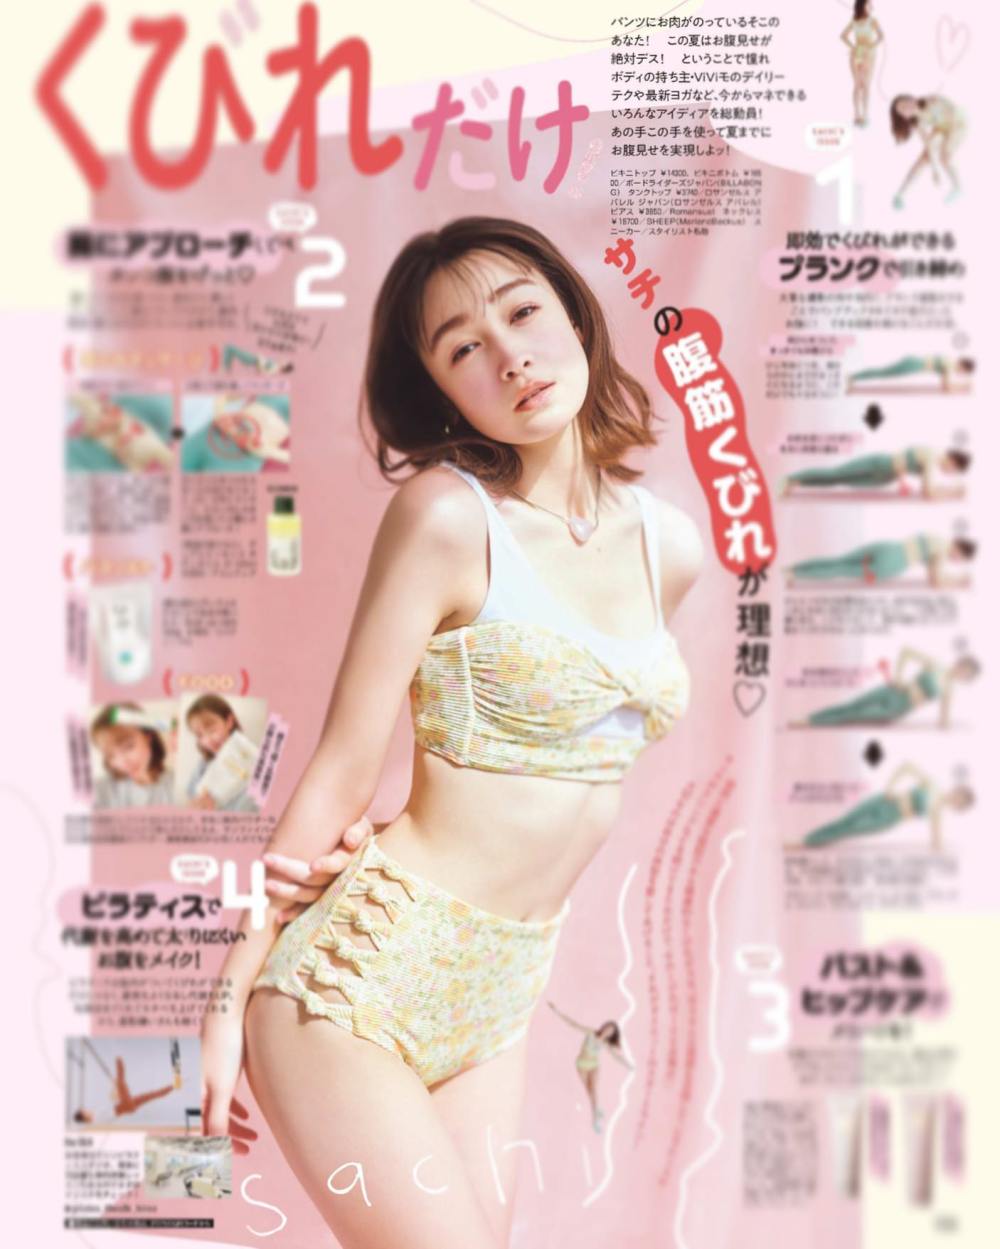 Fujii Sachi Sexy and Hottest Photos , Latest Pics